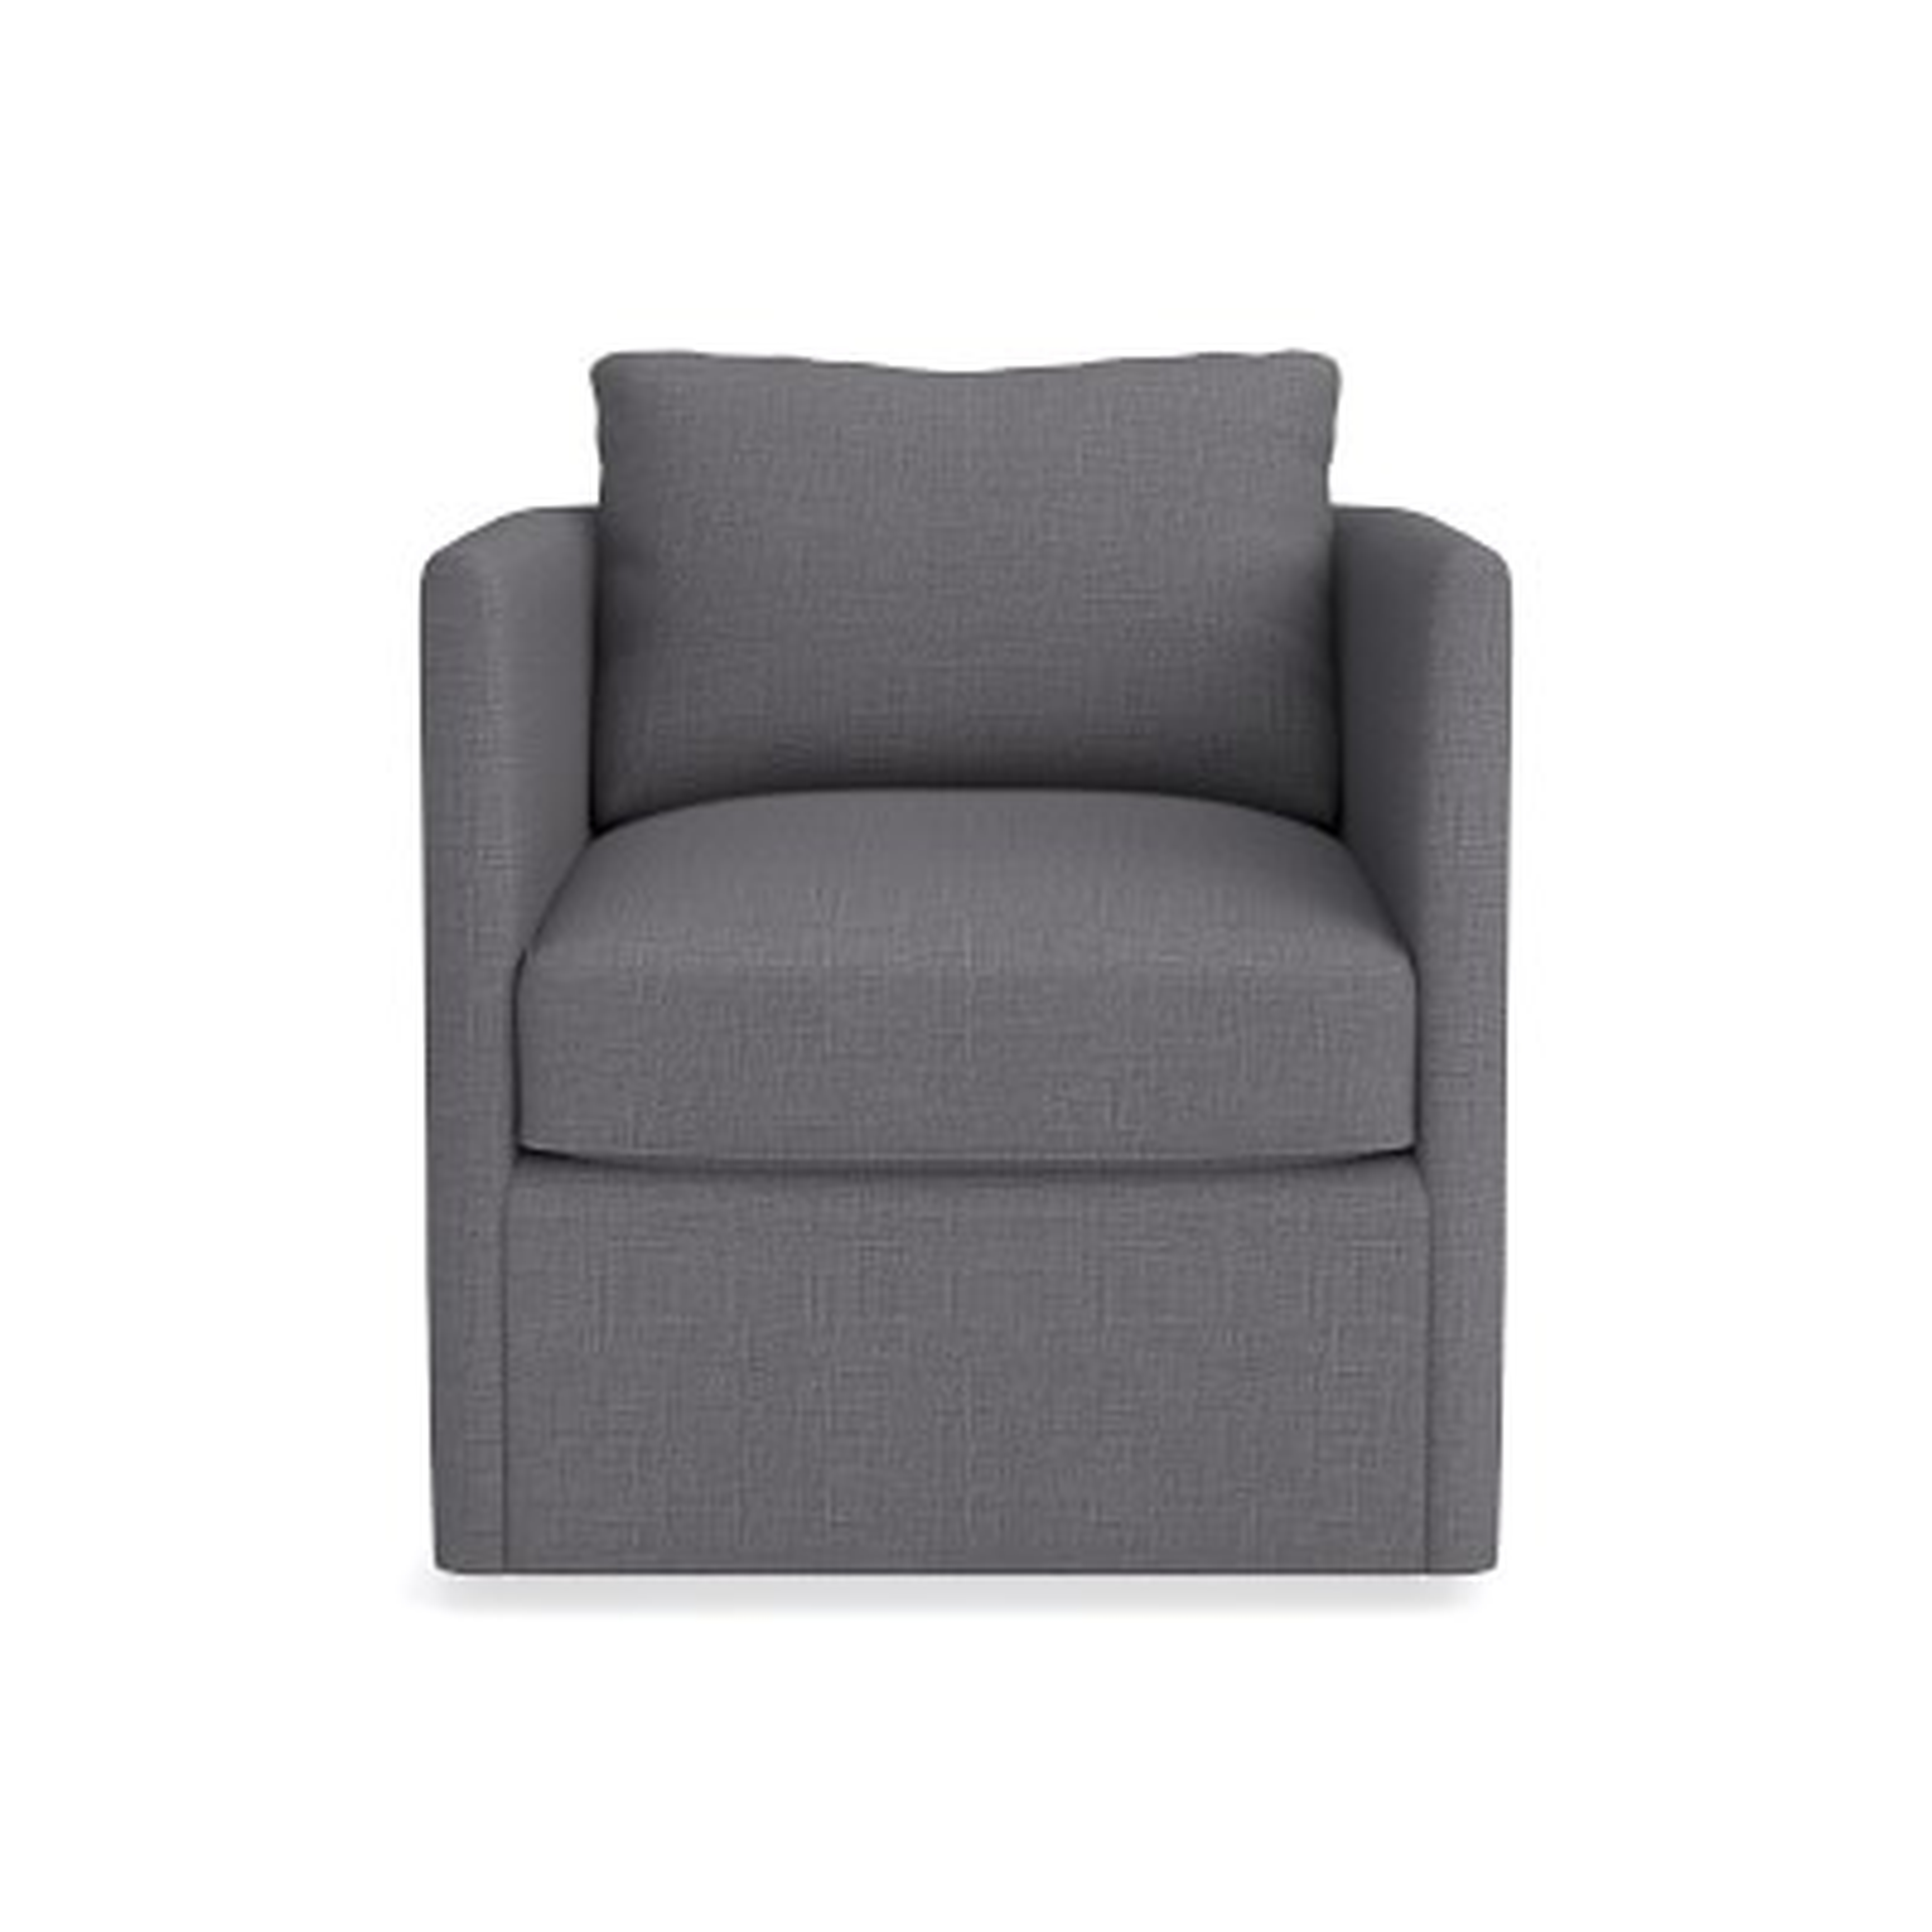 Naples Swivel Chair, Textured Linen/Cotton, Charcoal - Williams Sonoma